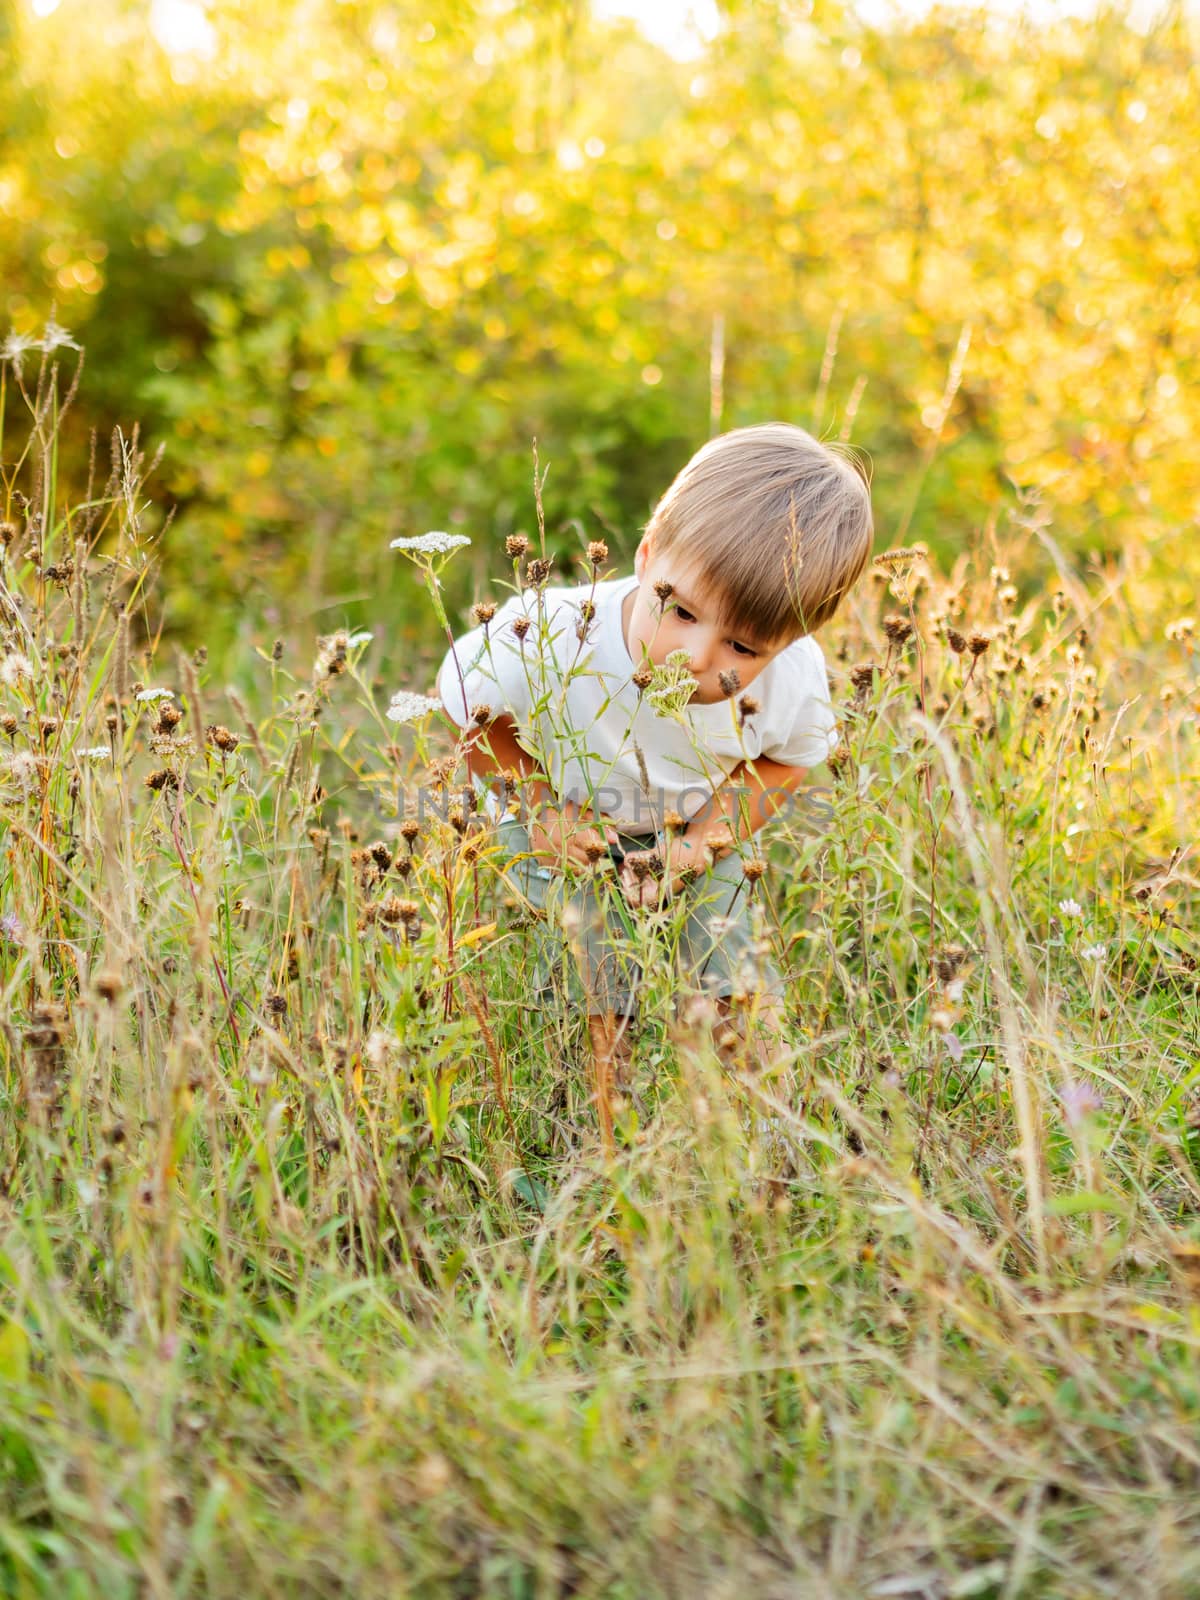 Cute little boy is sniffing flowers on field. Outdoor leisure activity for toddler. Autumn season. Orange sunset light.